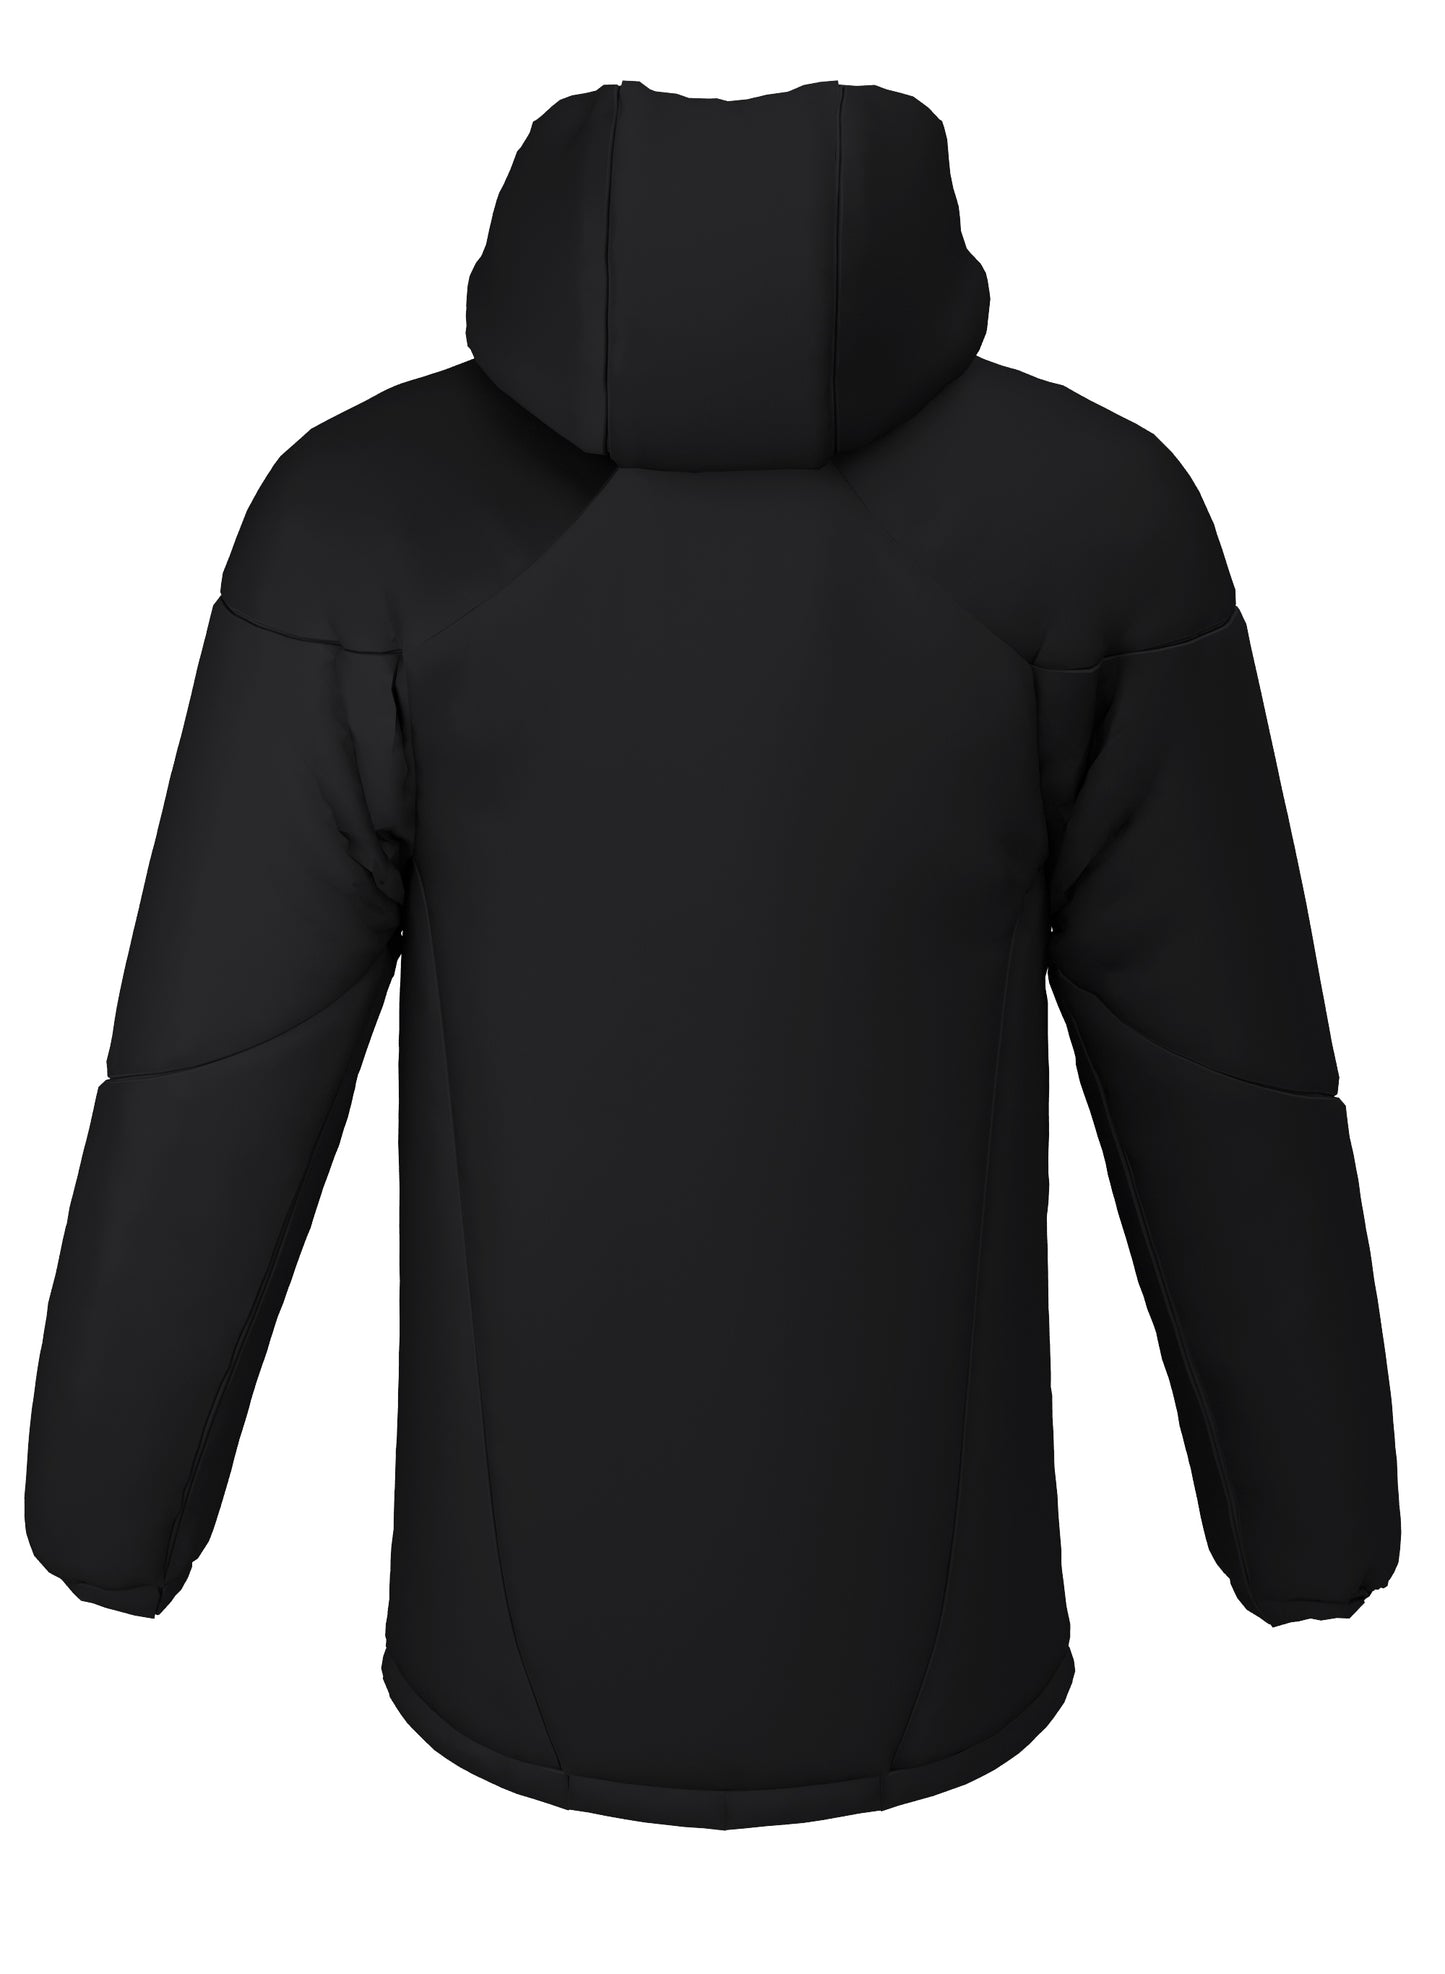 Elite Contour Thermal Jacket - Black